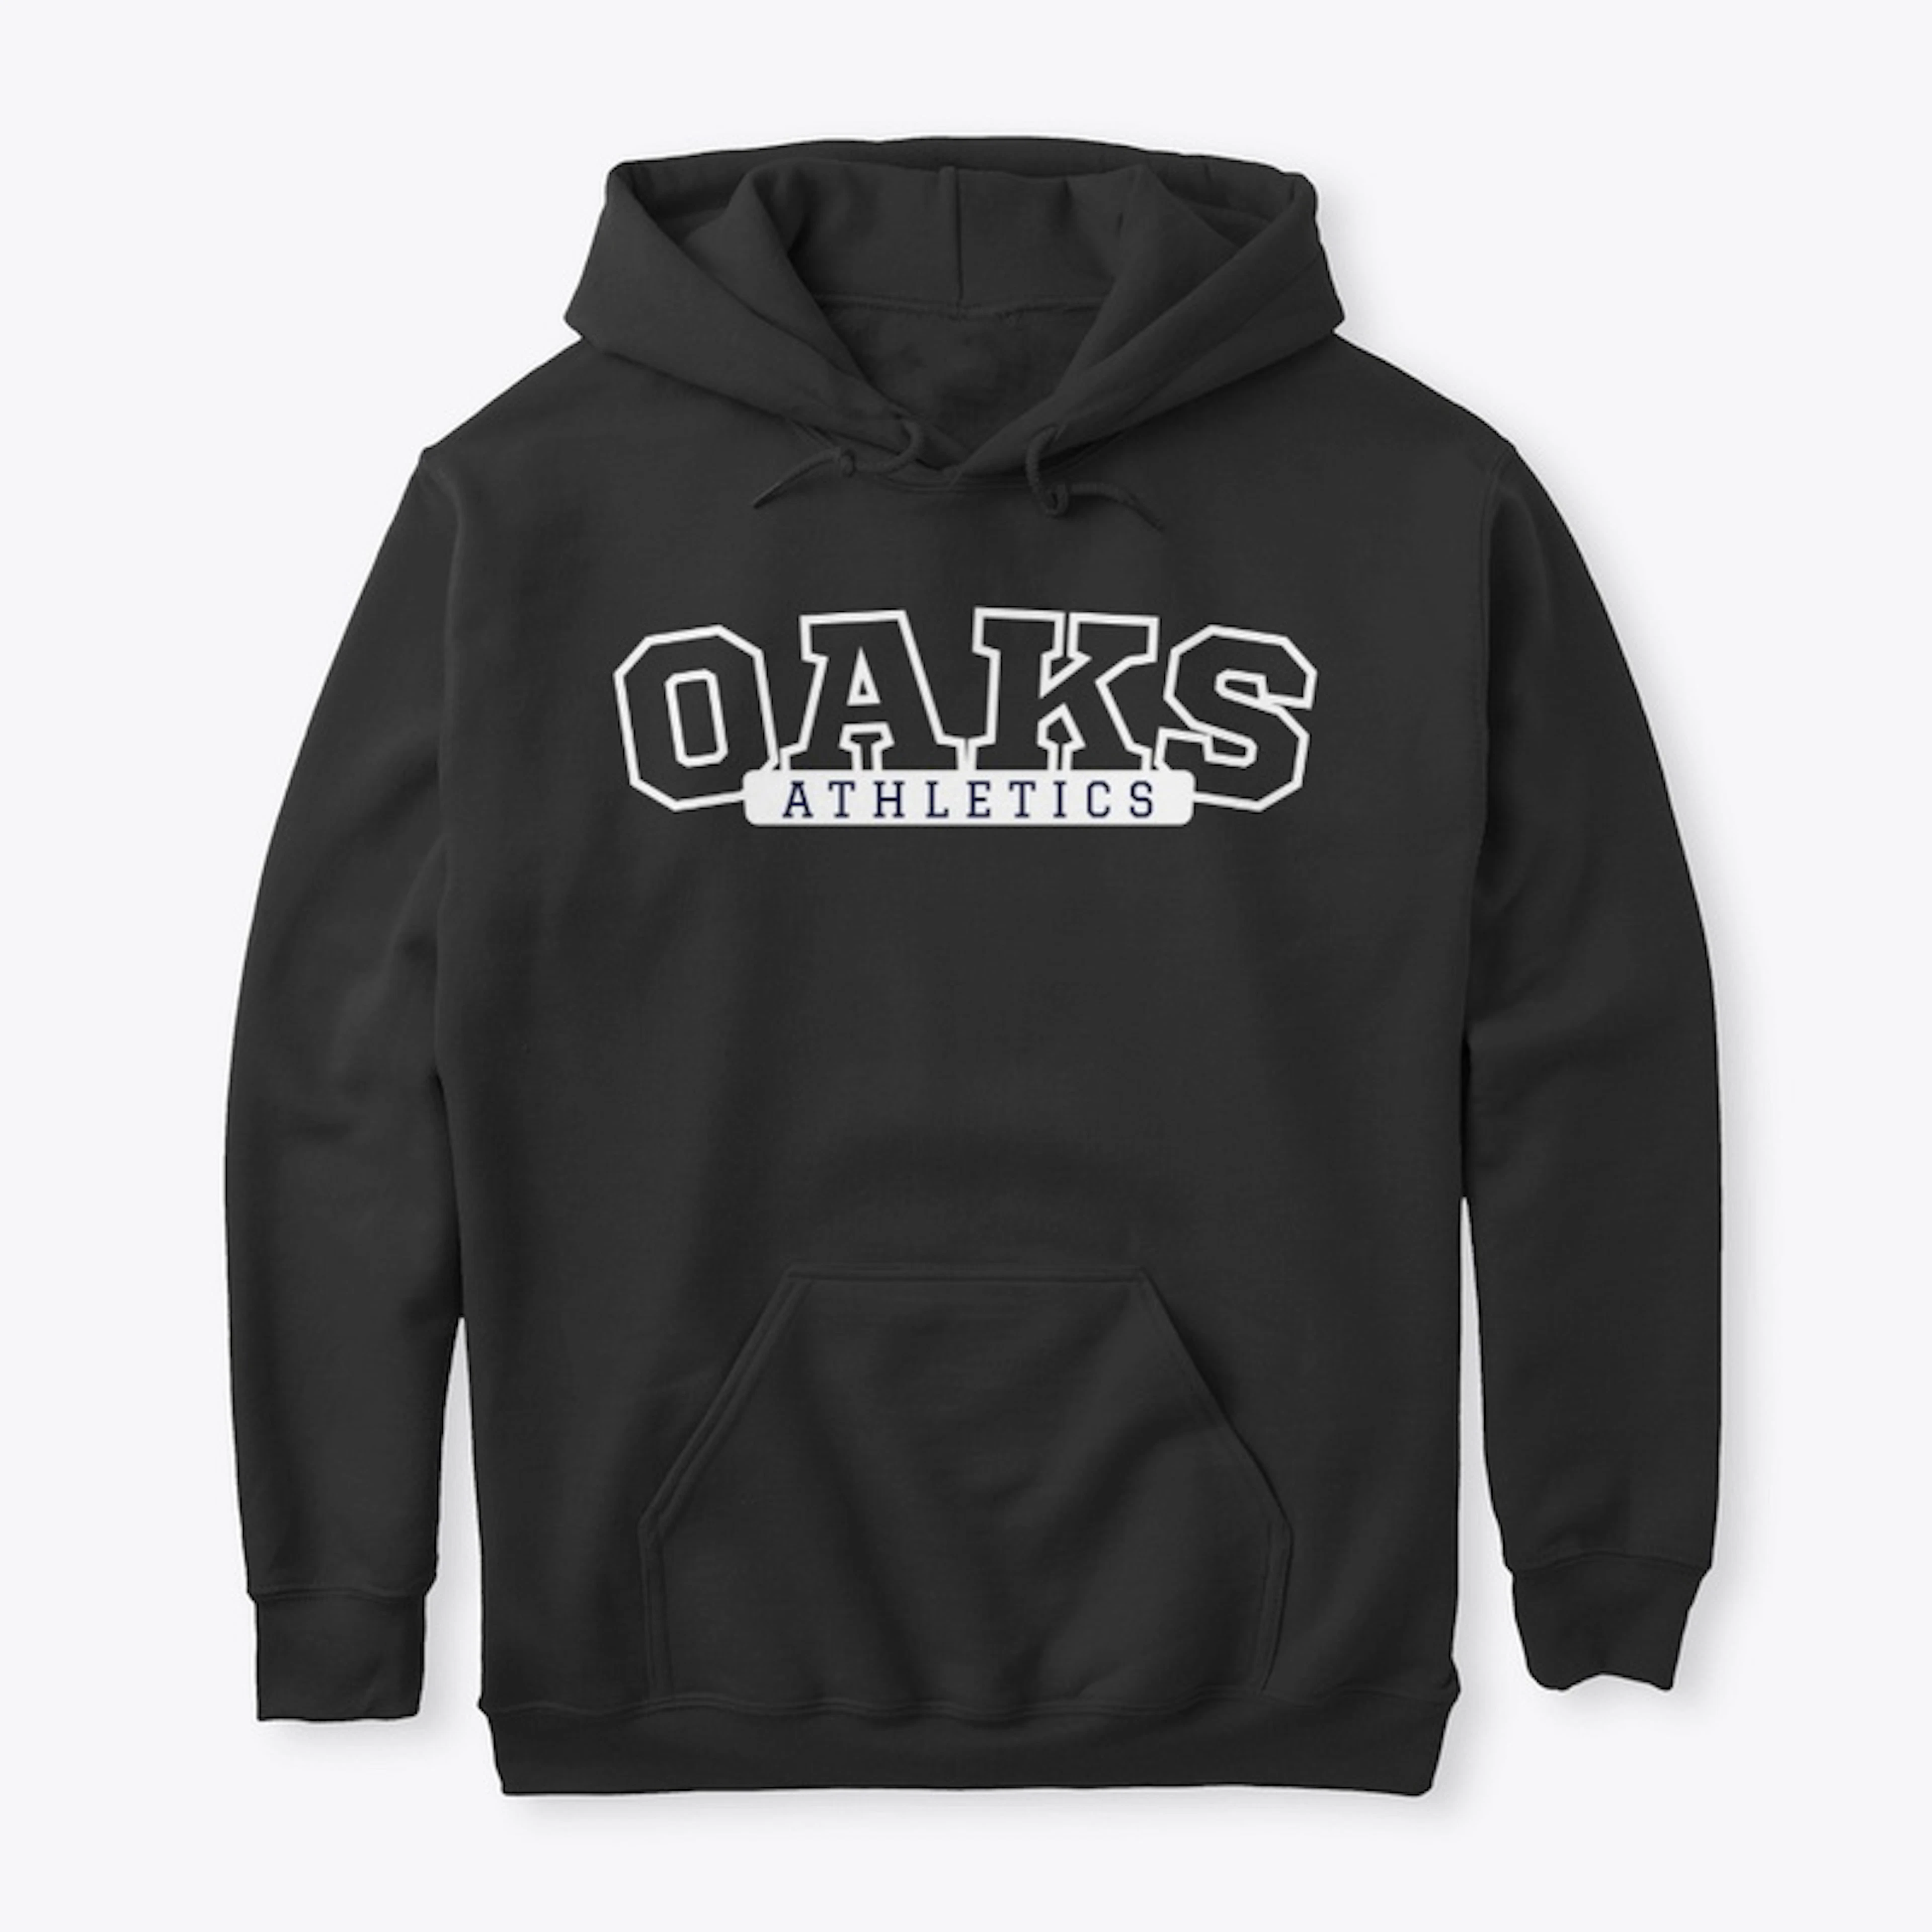 The Oaks Athletics